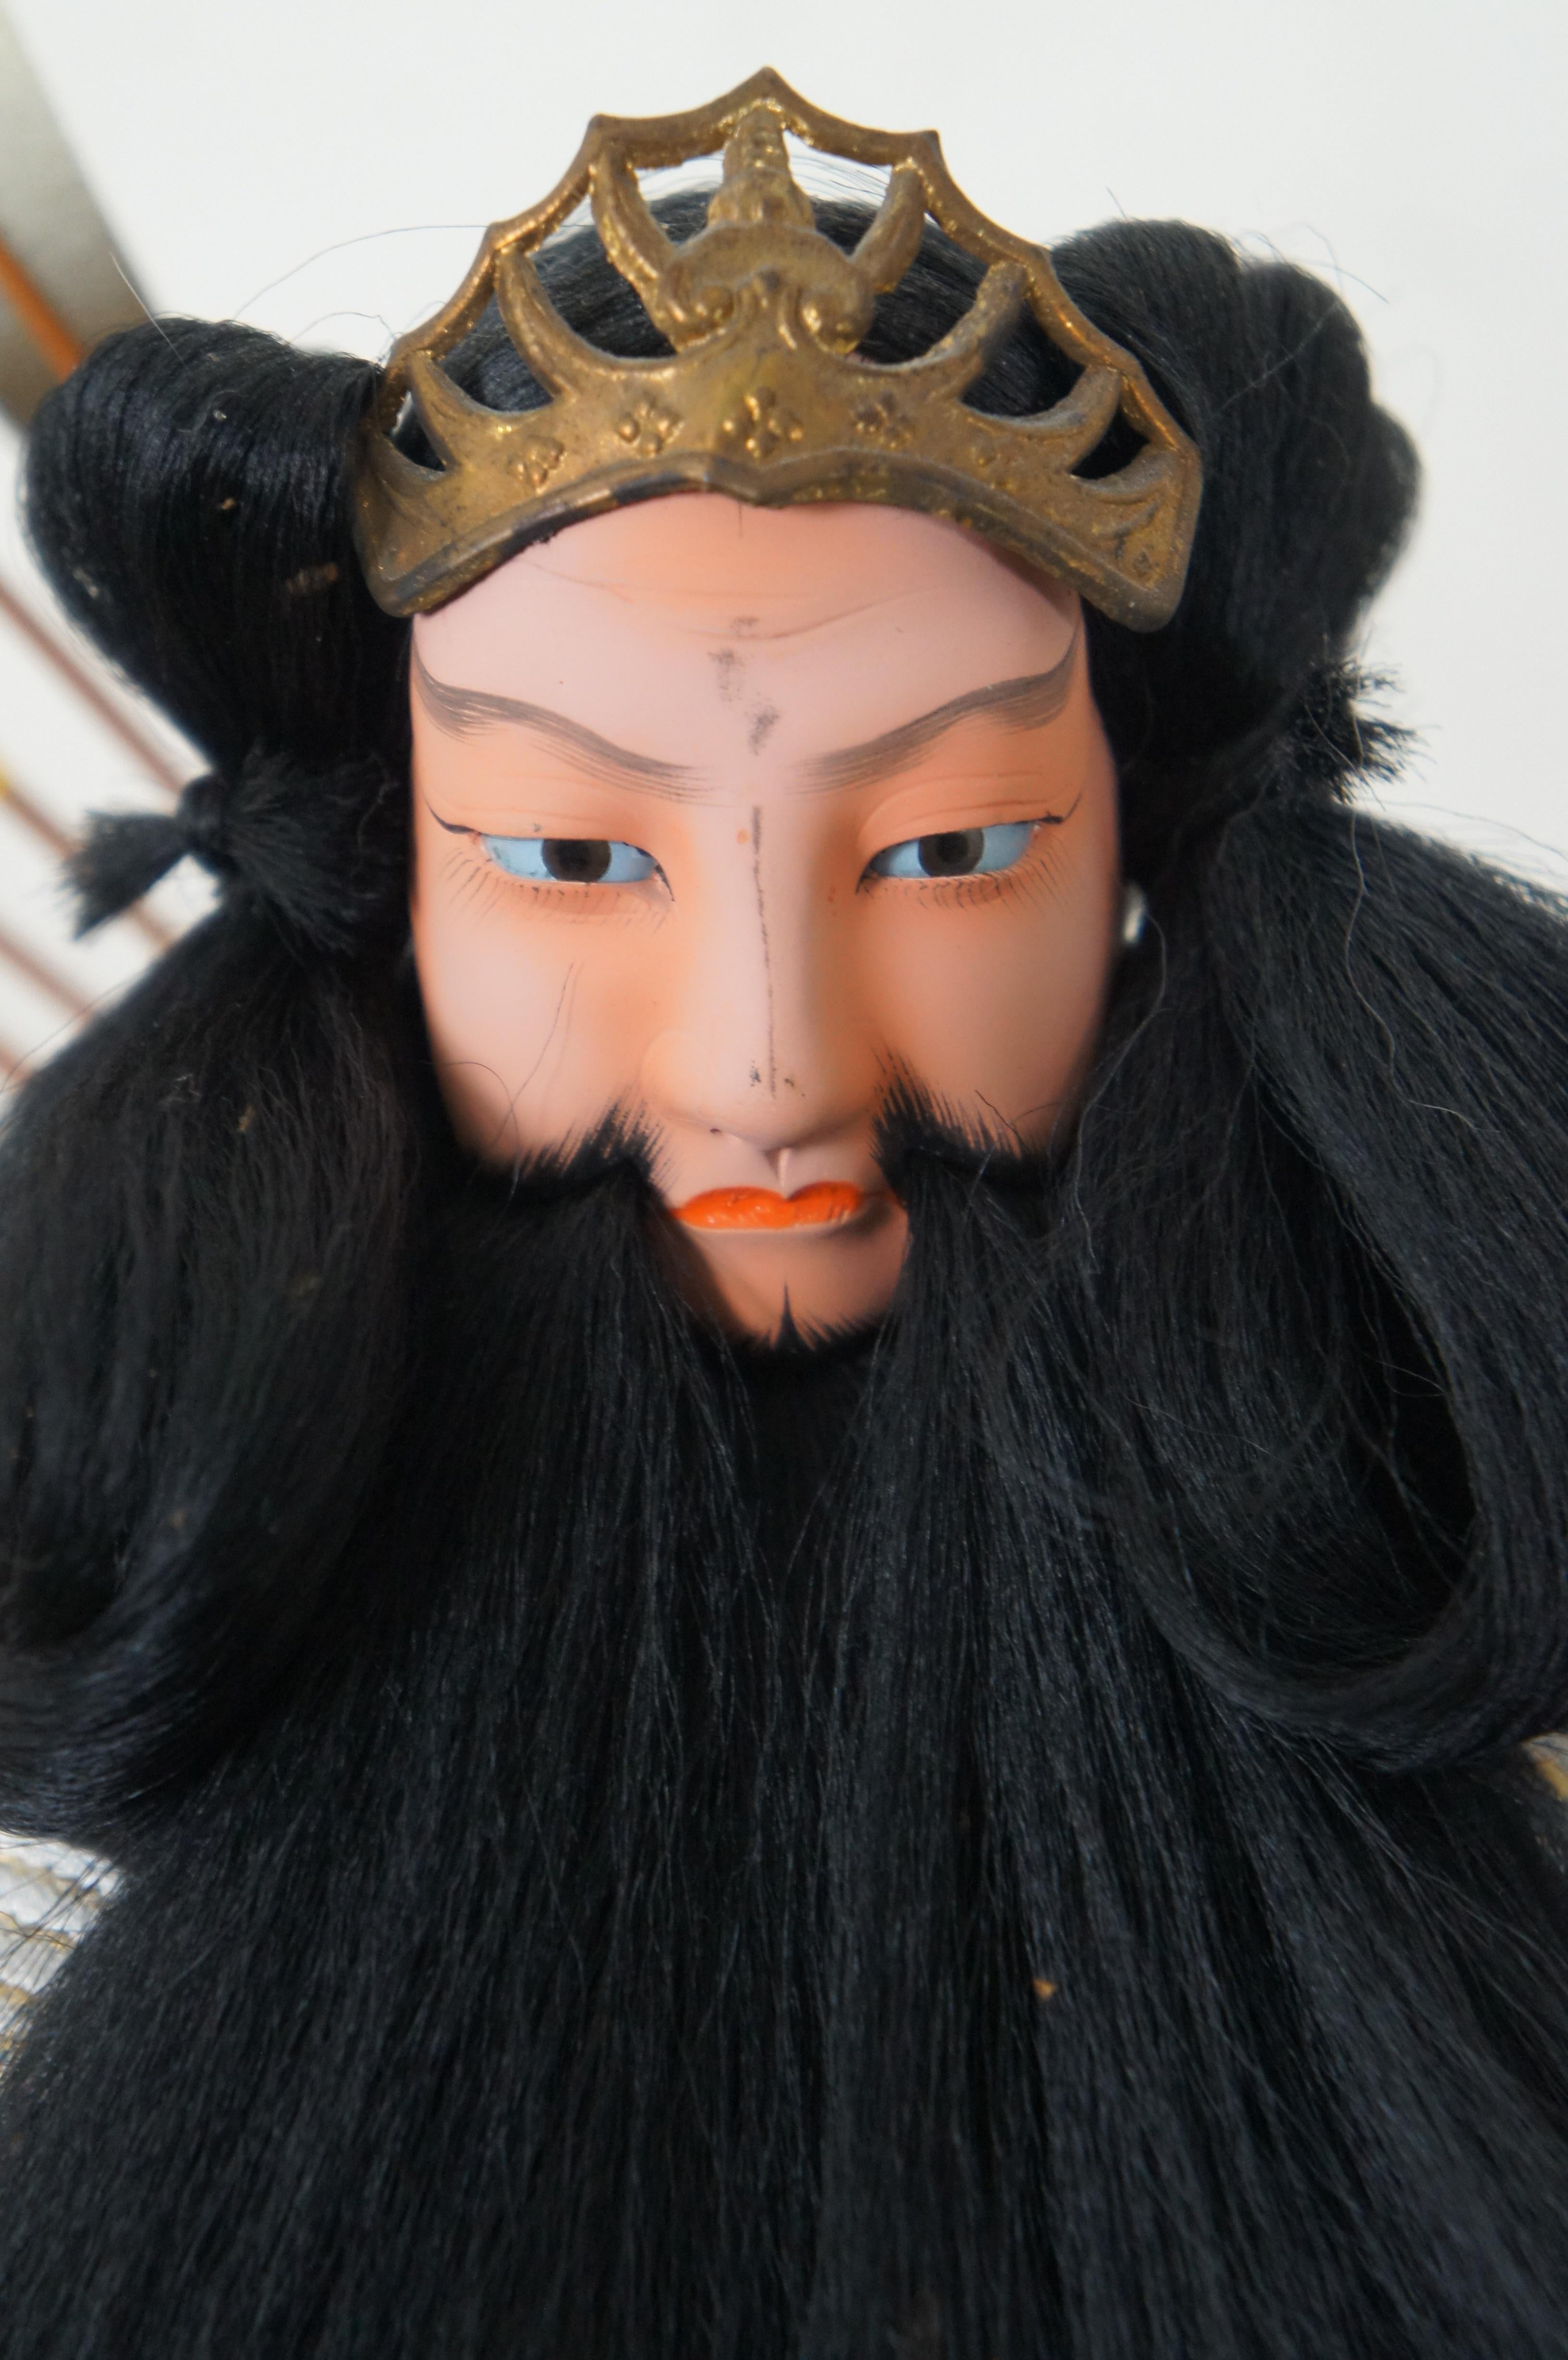 Jimmu Tenno Japanese Emperor Porcelain Bisque Samurai Doll Figurine 18